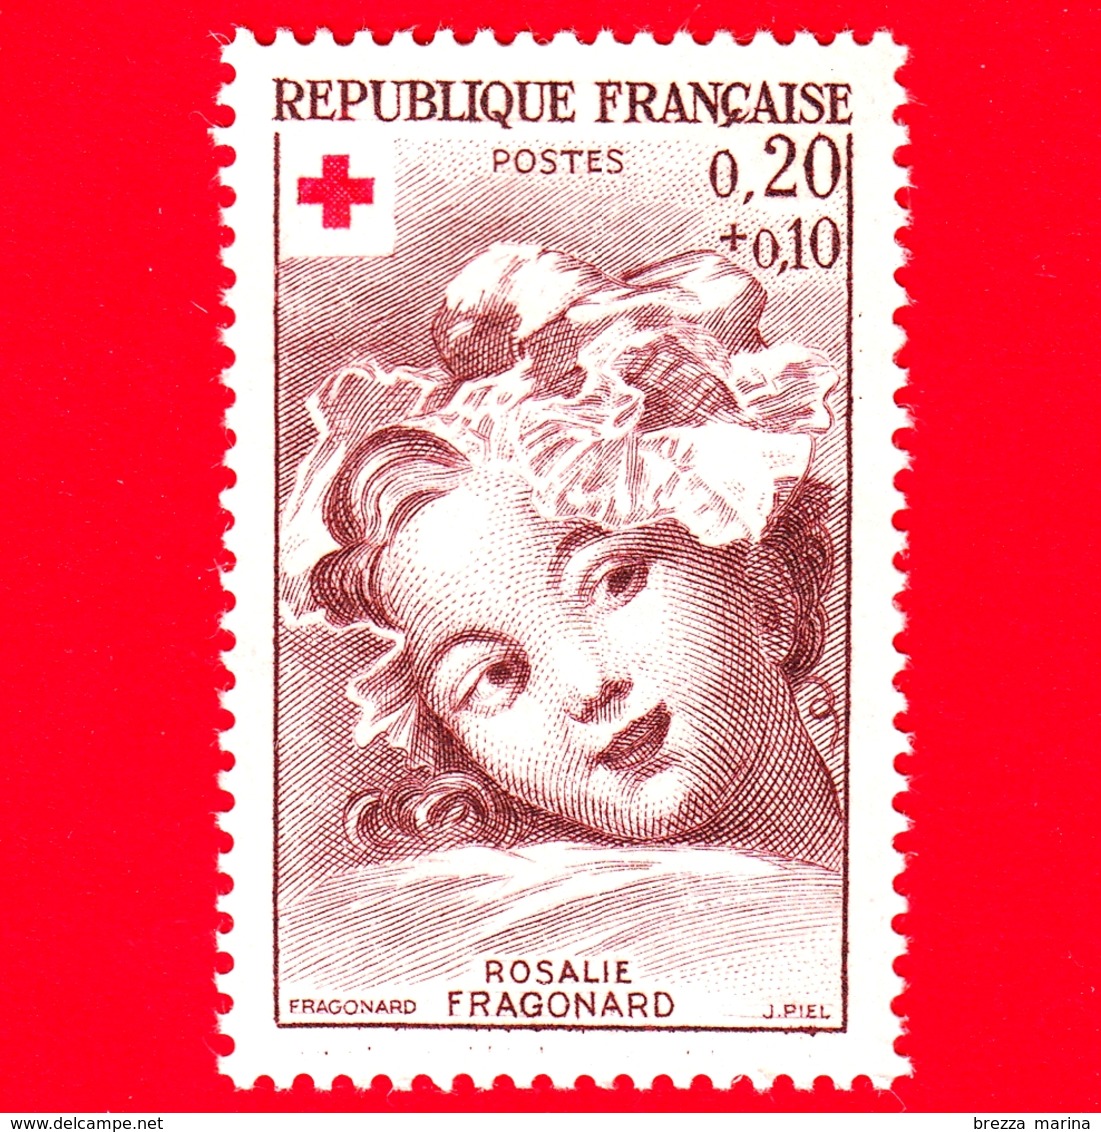 Nuovo - MNH - FRANCIA - 1962 - Croce Rossa - Fragonard (1732-1806) - 'Rosalie Fragonard' - 0.20+0.10 - Nuovi